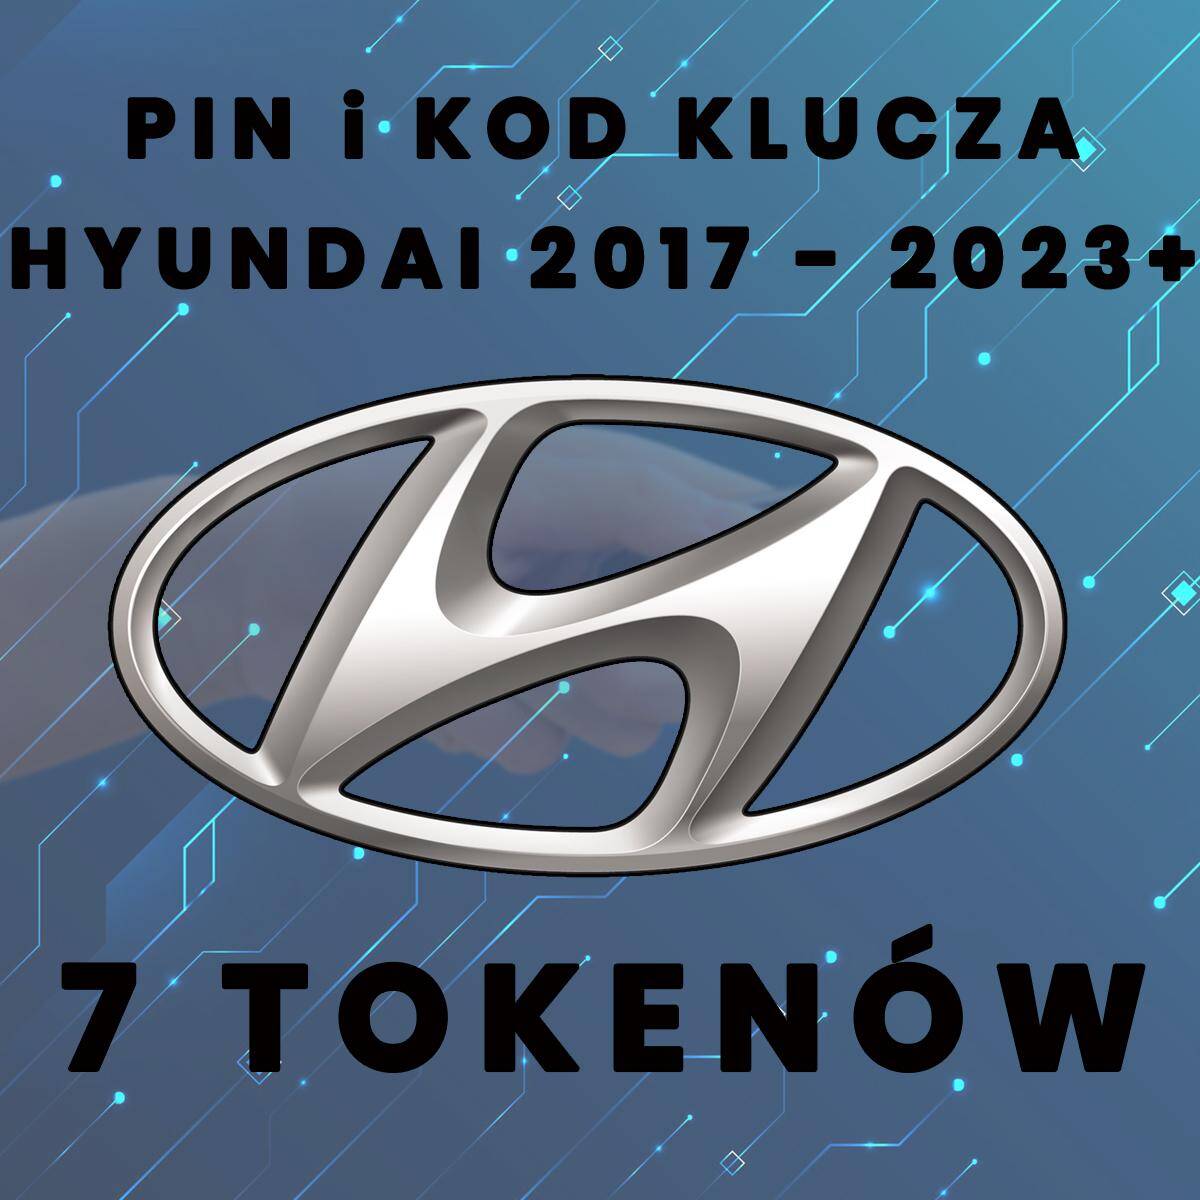 Pin i kod klucza Hyundai rocznik 2017 - 2023+